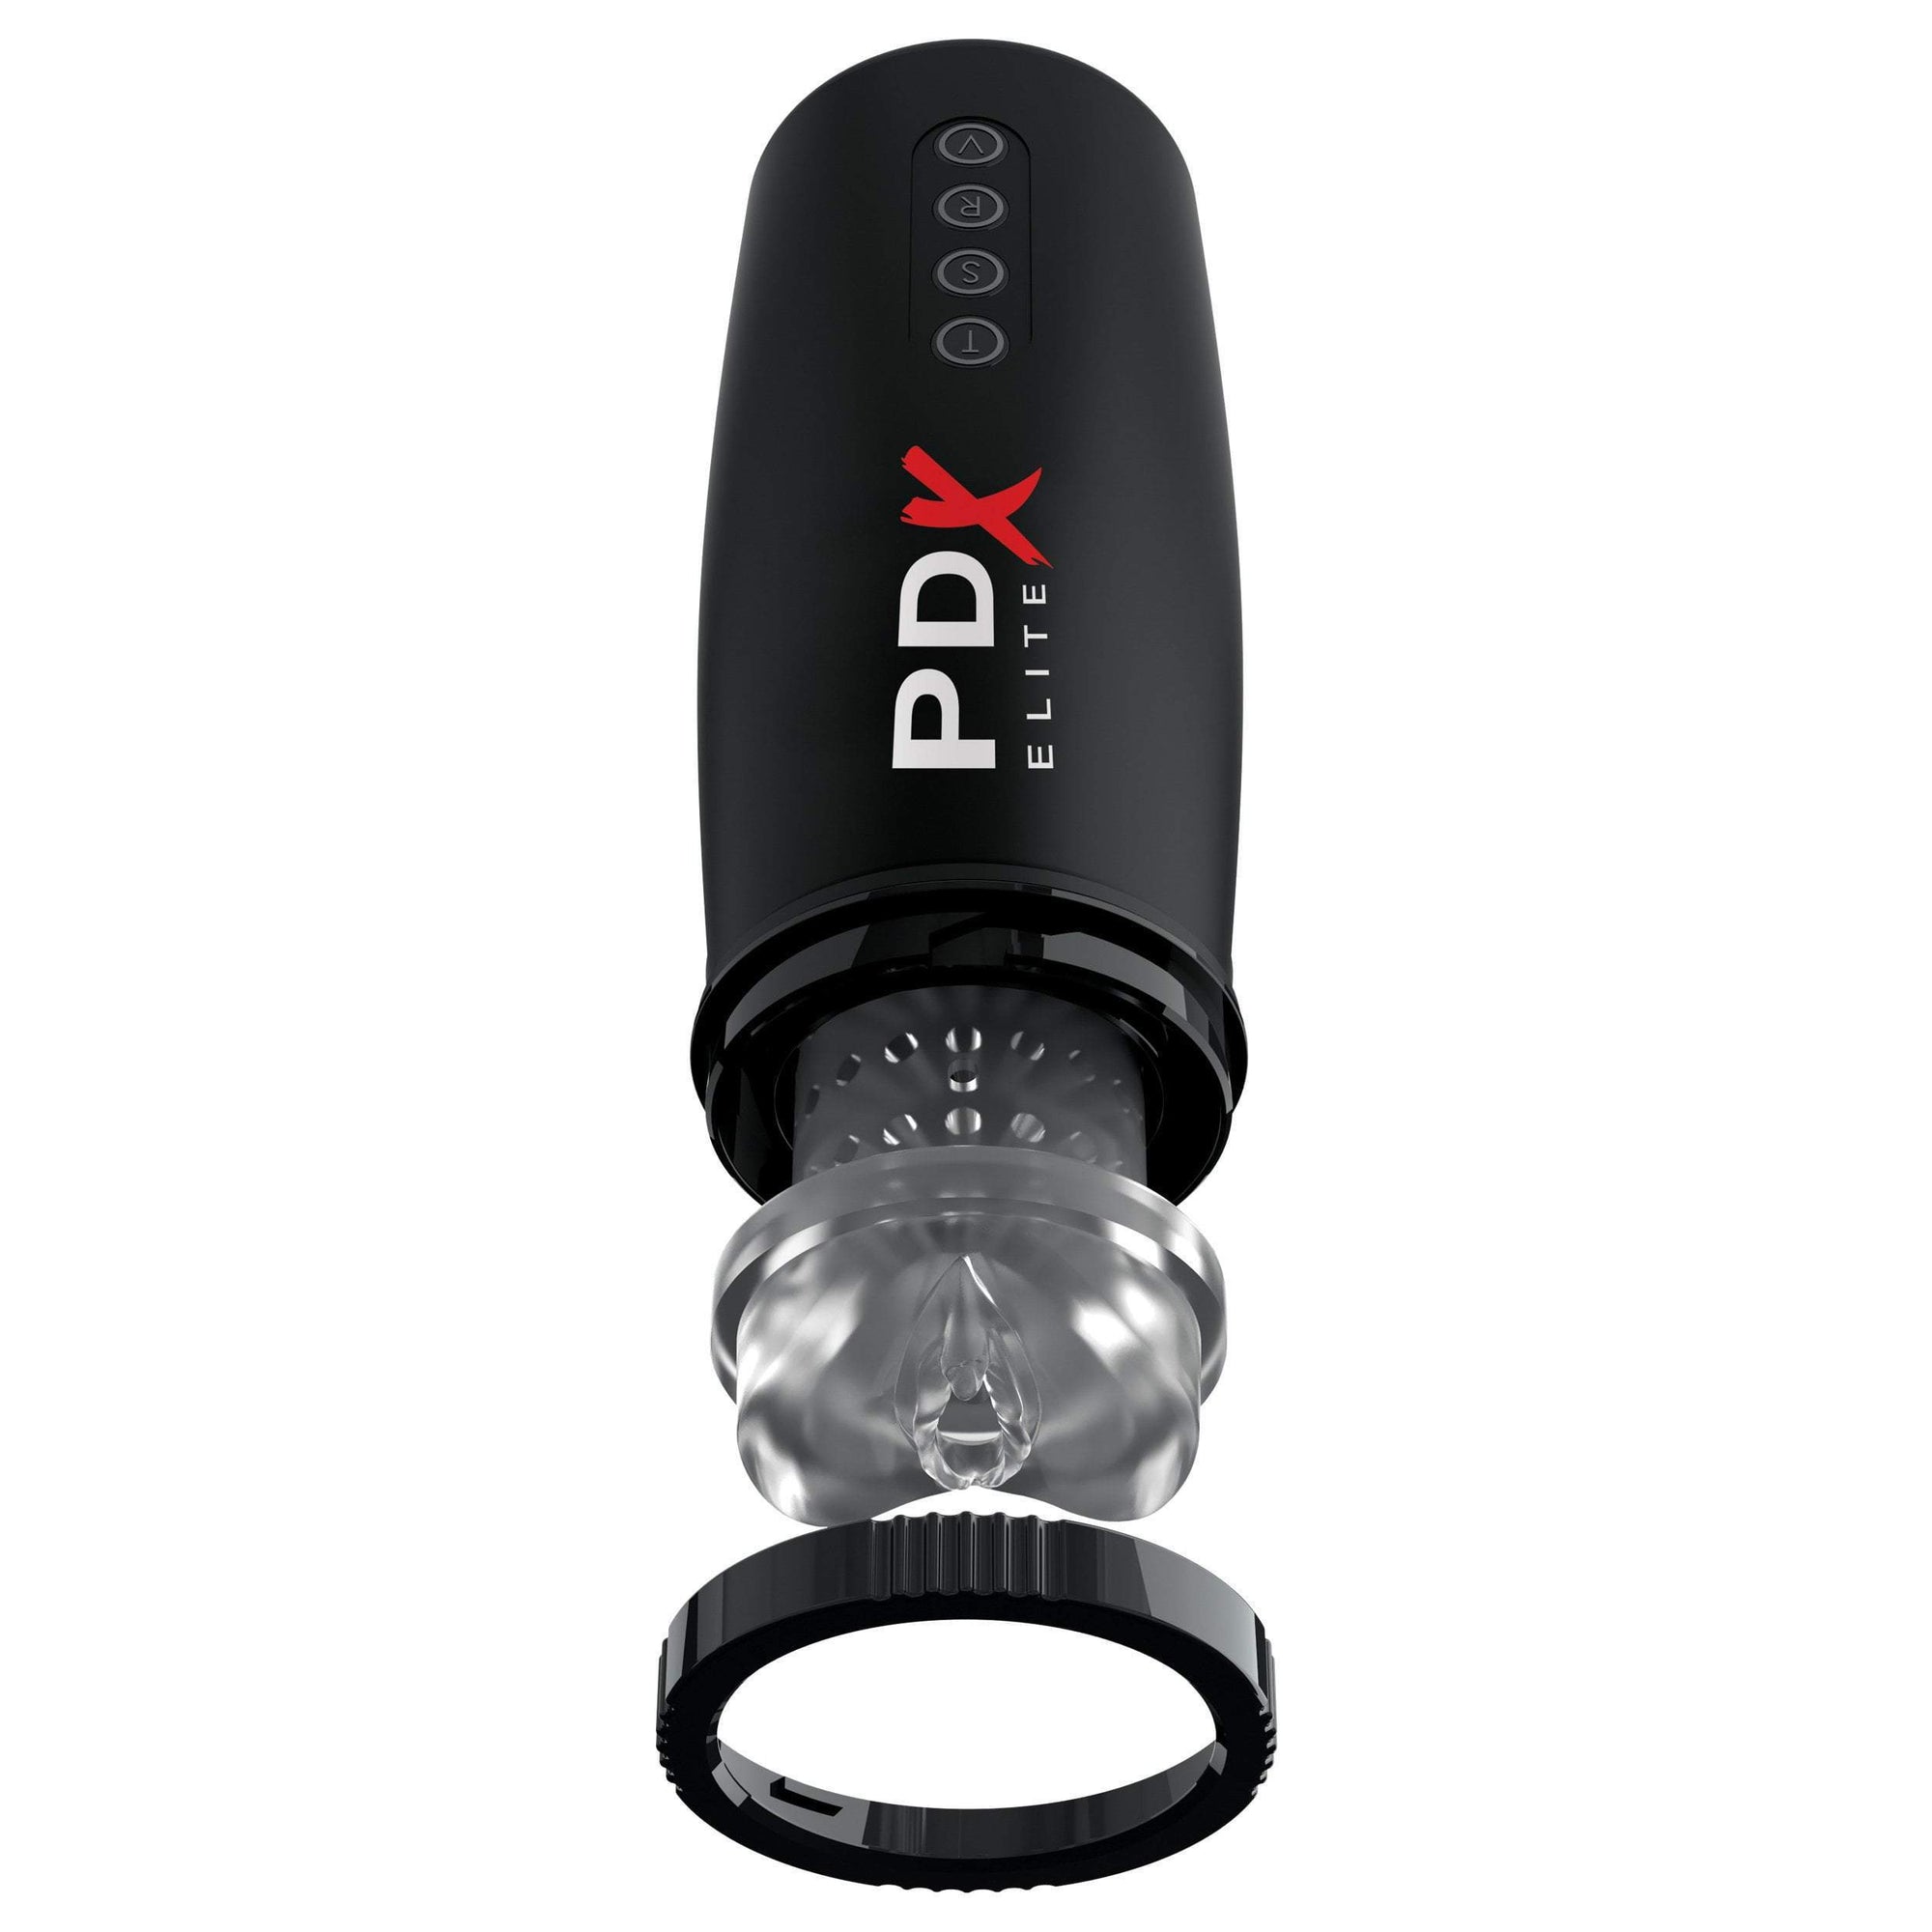 Pipedream - PDX Elite Moto Bator 2 Thrusting Mouth Masturbator (Black) Masturbator Mouth (Vibration) Rechargeable